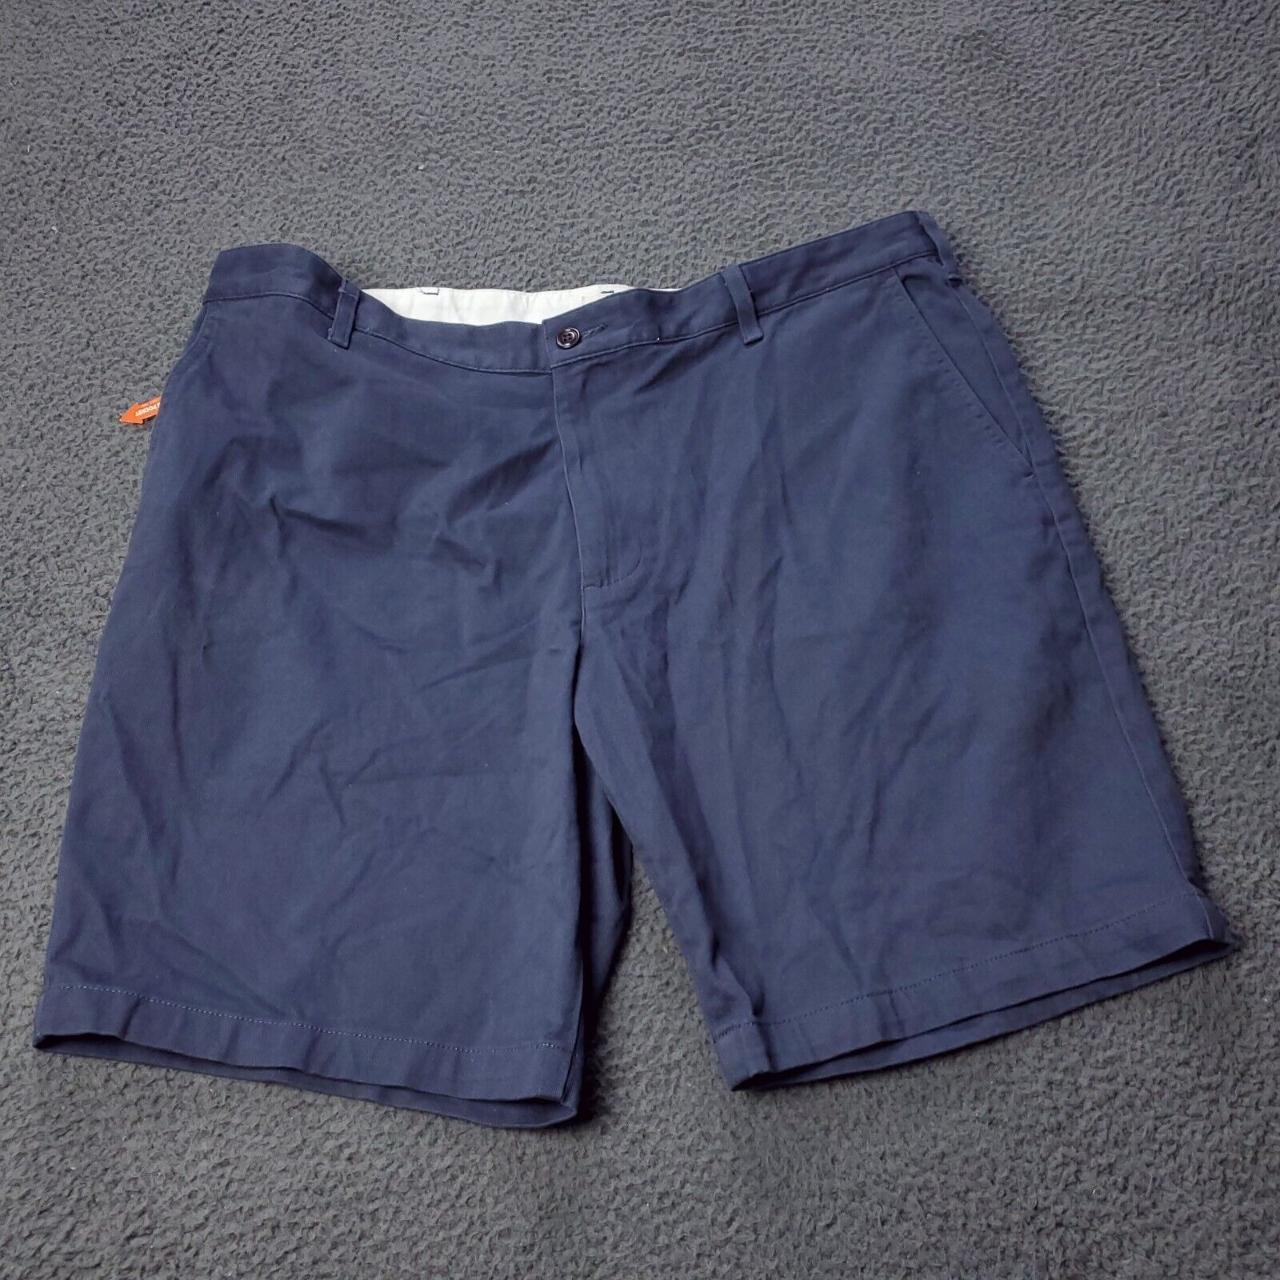 Dockers Men's Blue Shorts